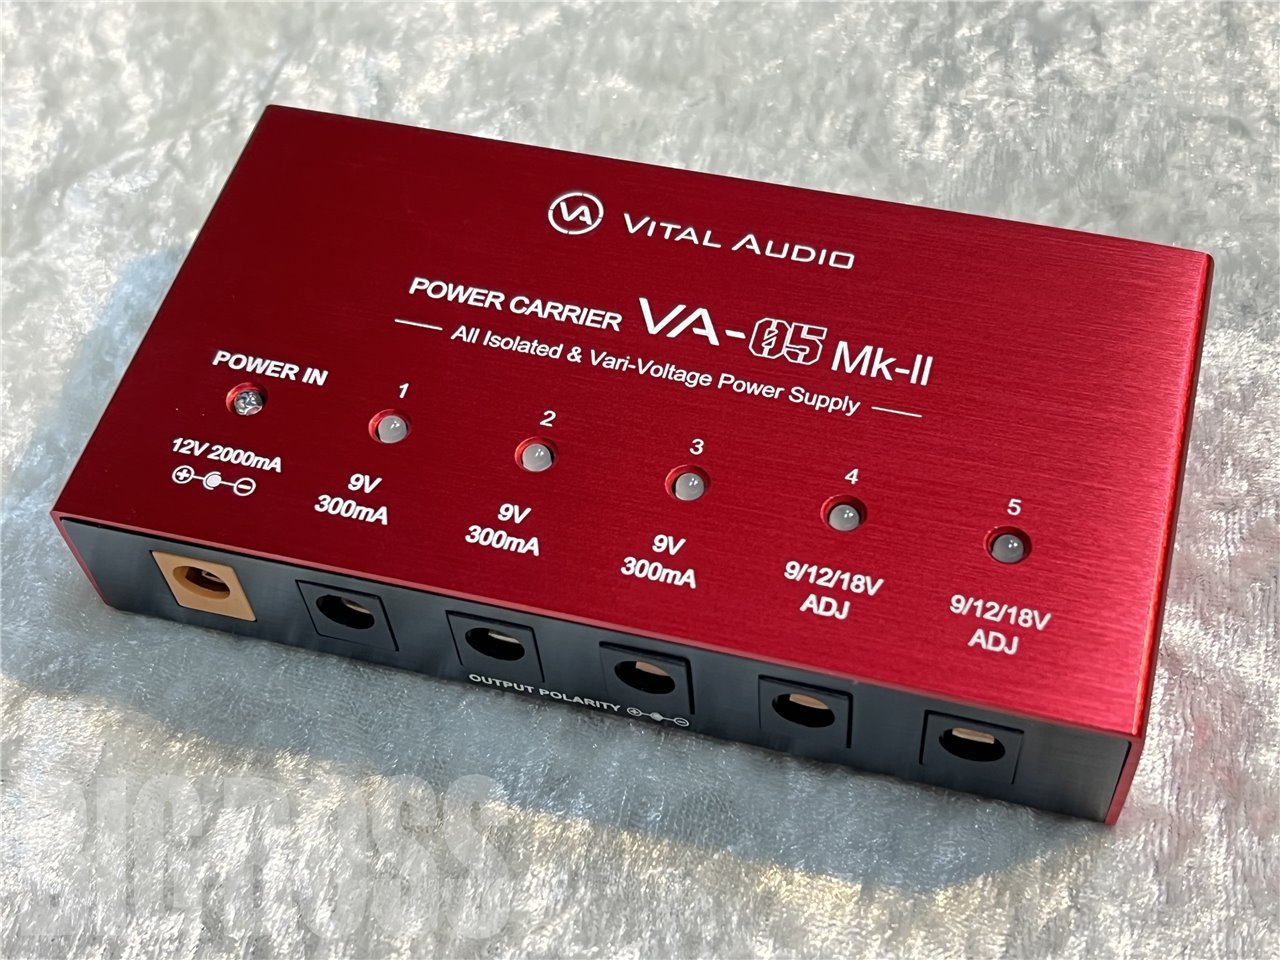 Vital Audio POWER CARIER VA-05ADJ